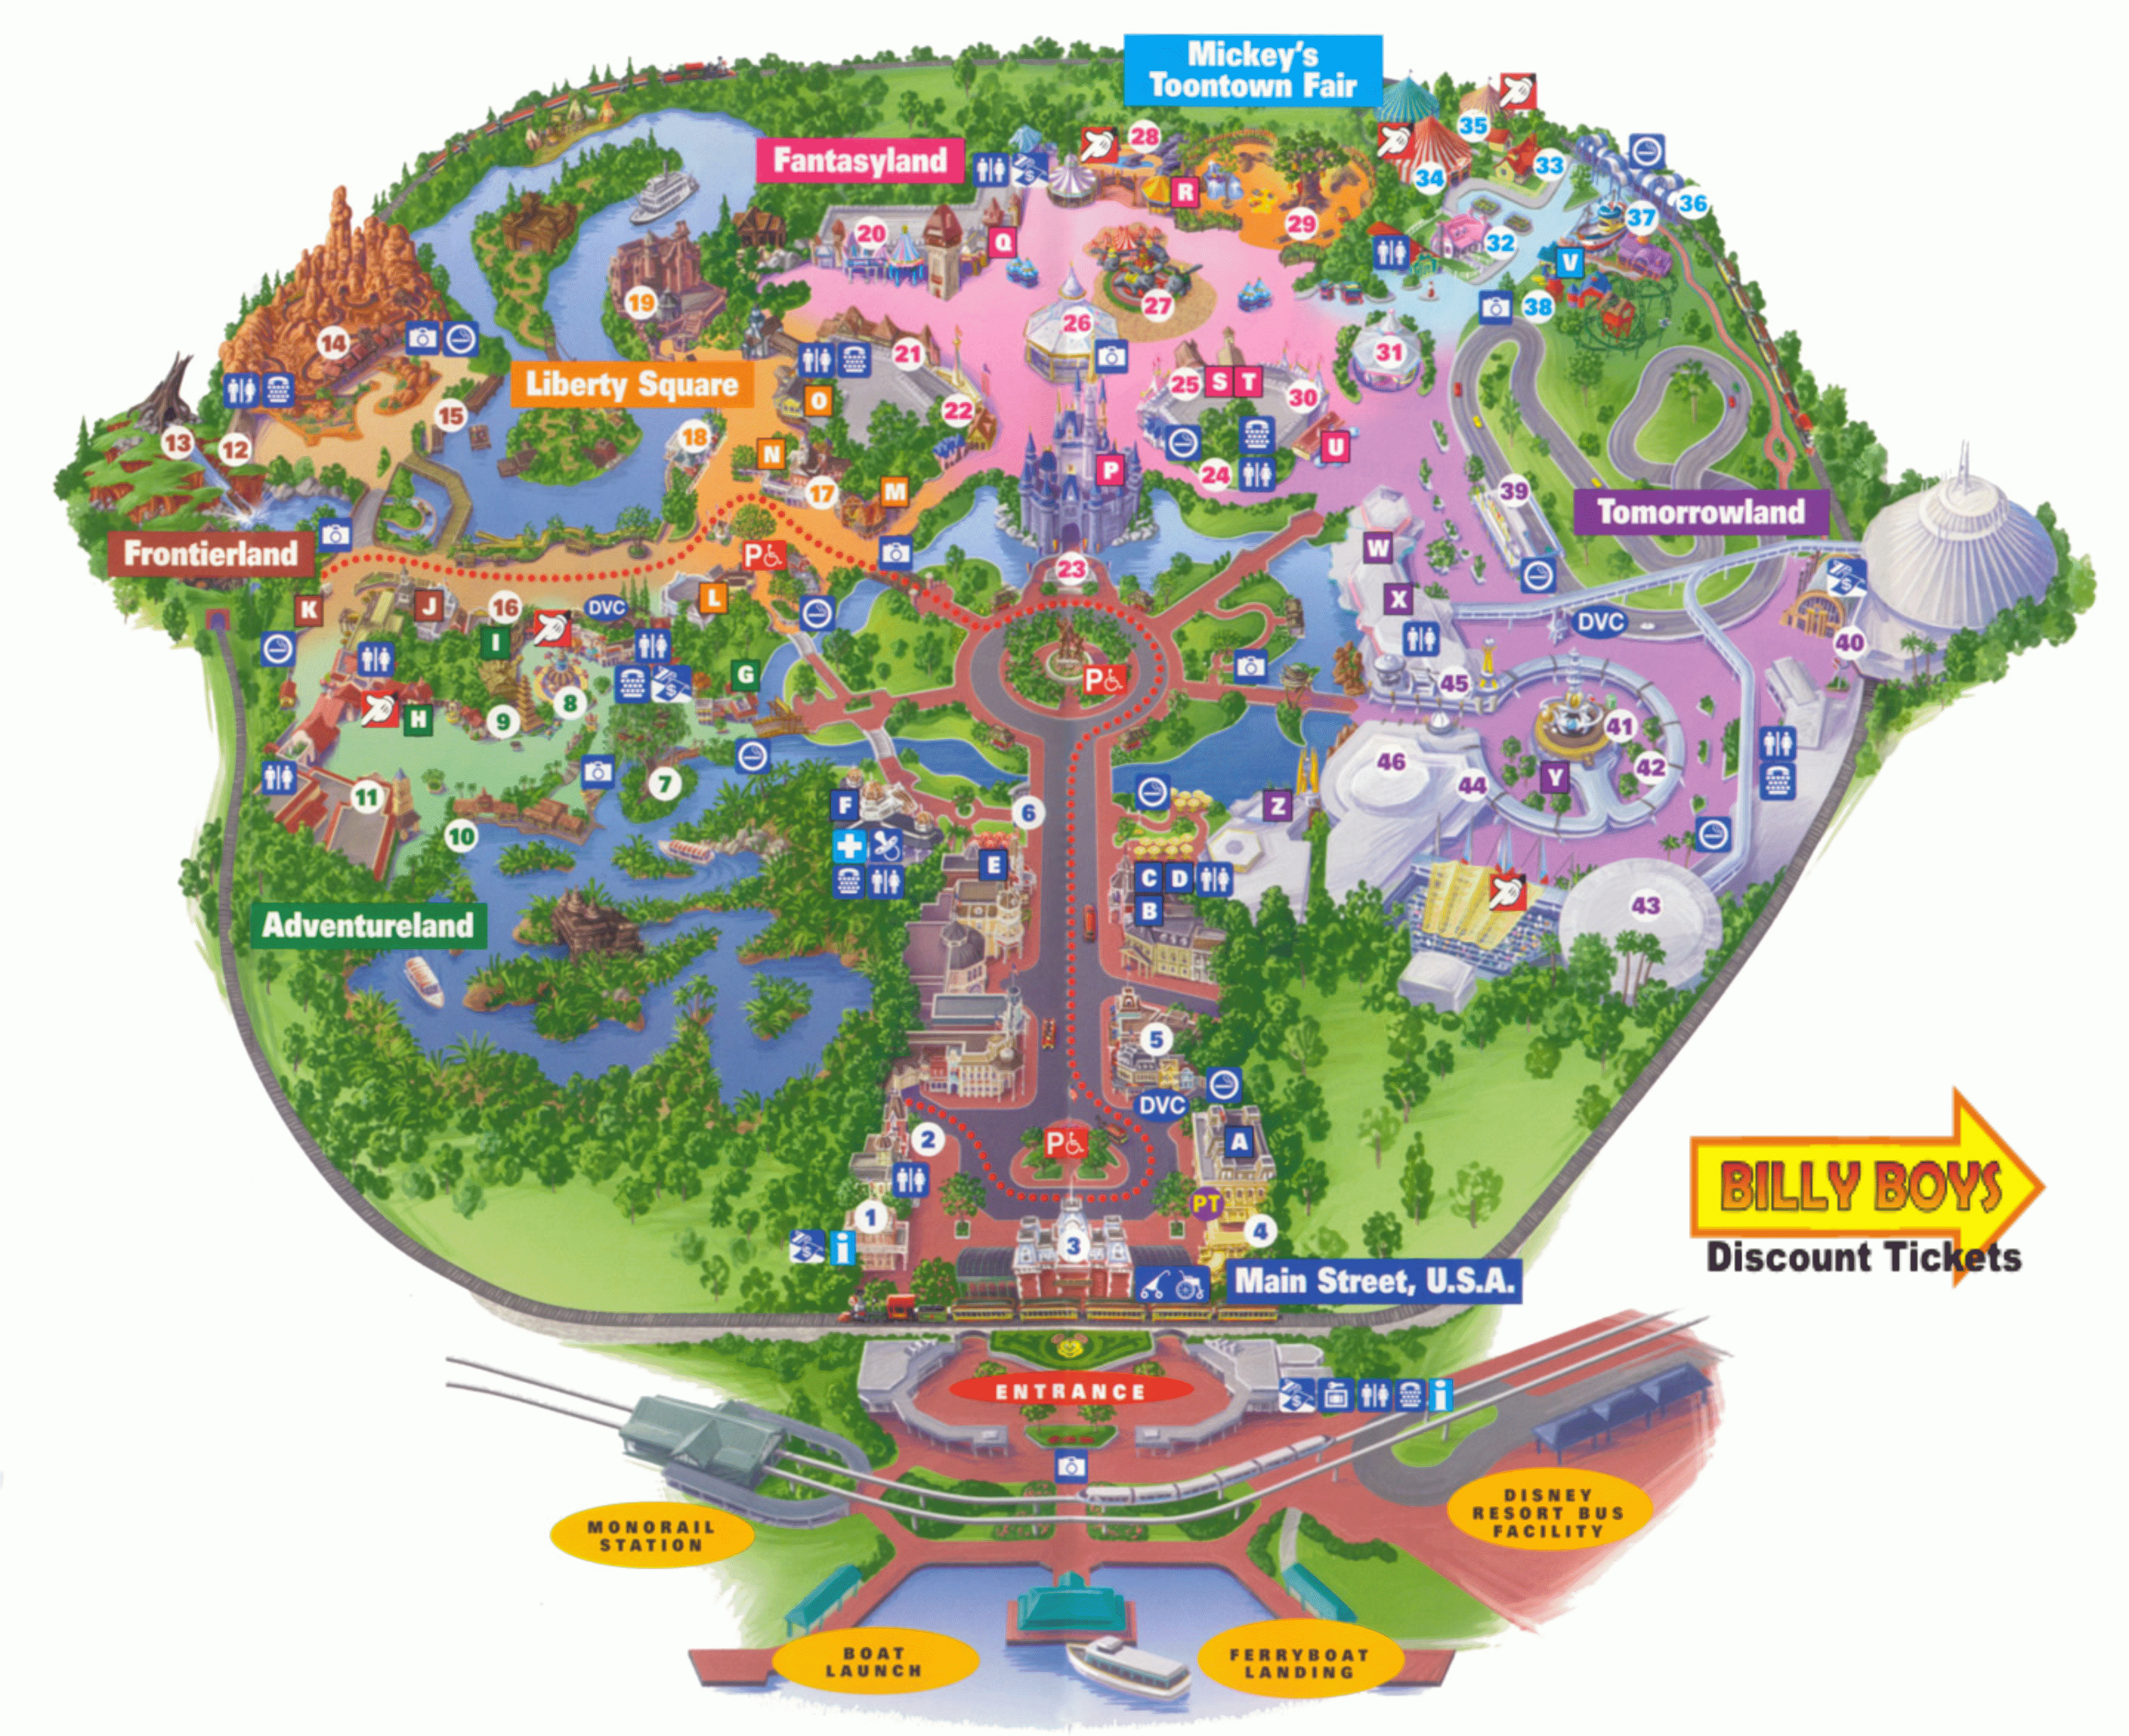 Disneyworld Map | Disney World Map Disney World Map Disney World Map - Map Of Florida Showing Disney World